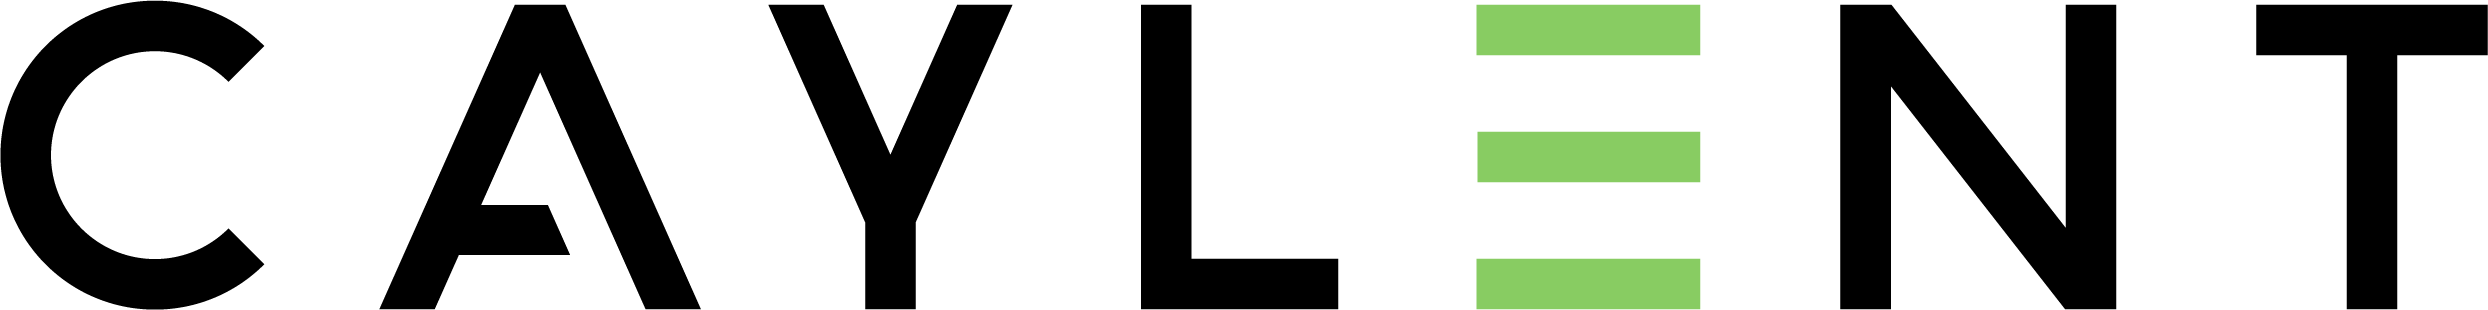 Caylent Logo Black-1